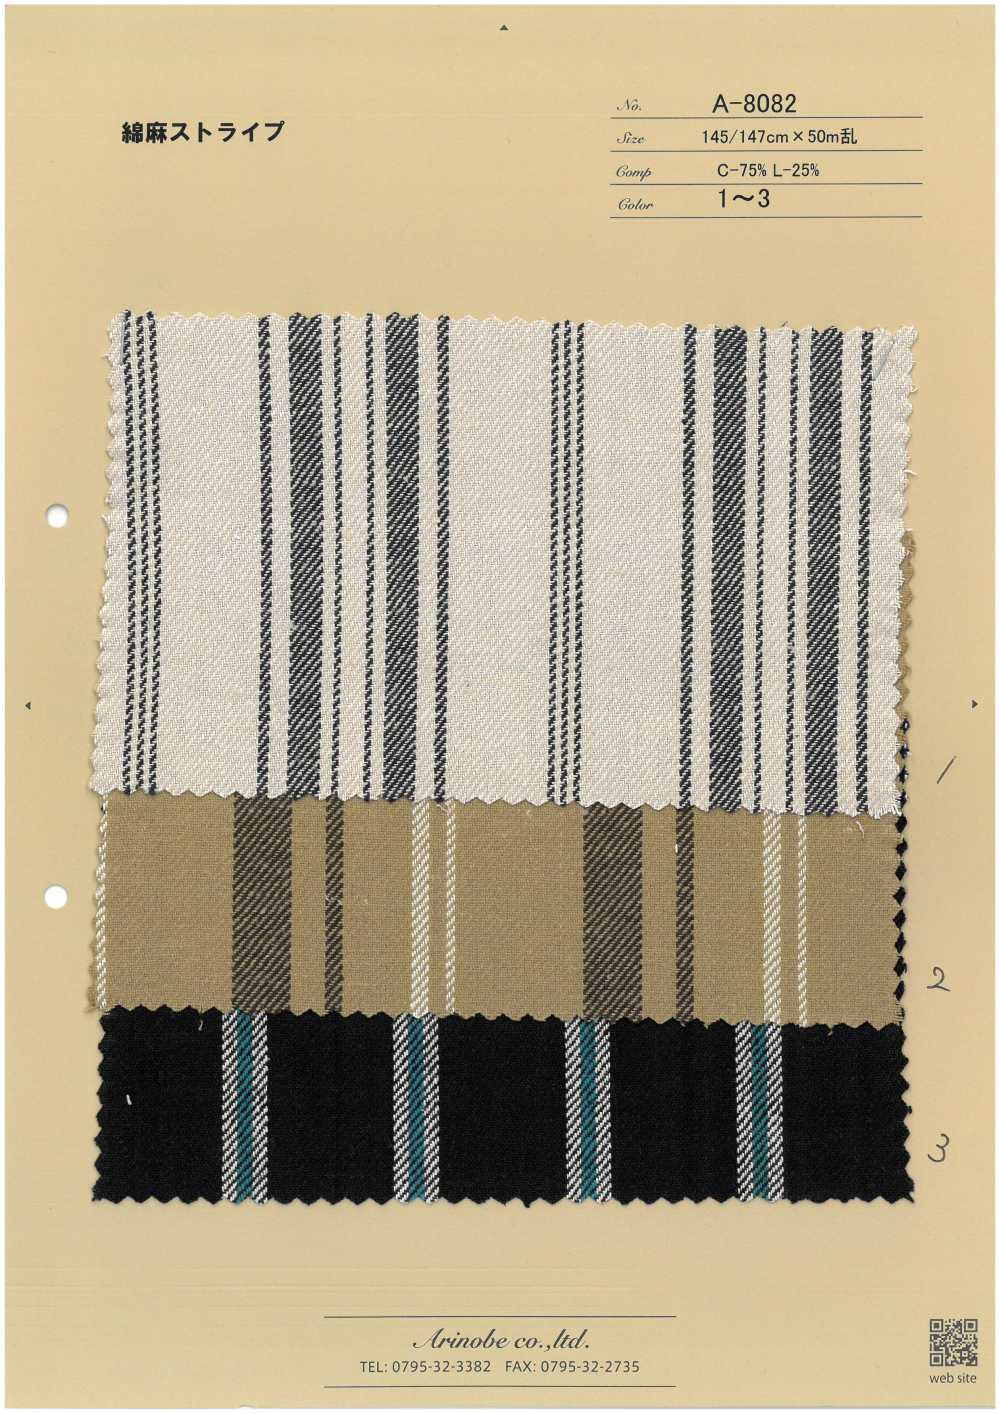 A-8082 Raya De Lino[Fabrica Textil] ARINOBE CO., LTD.